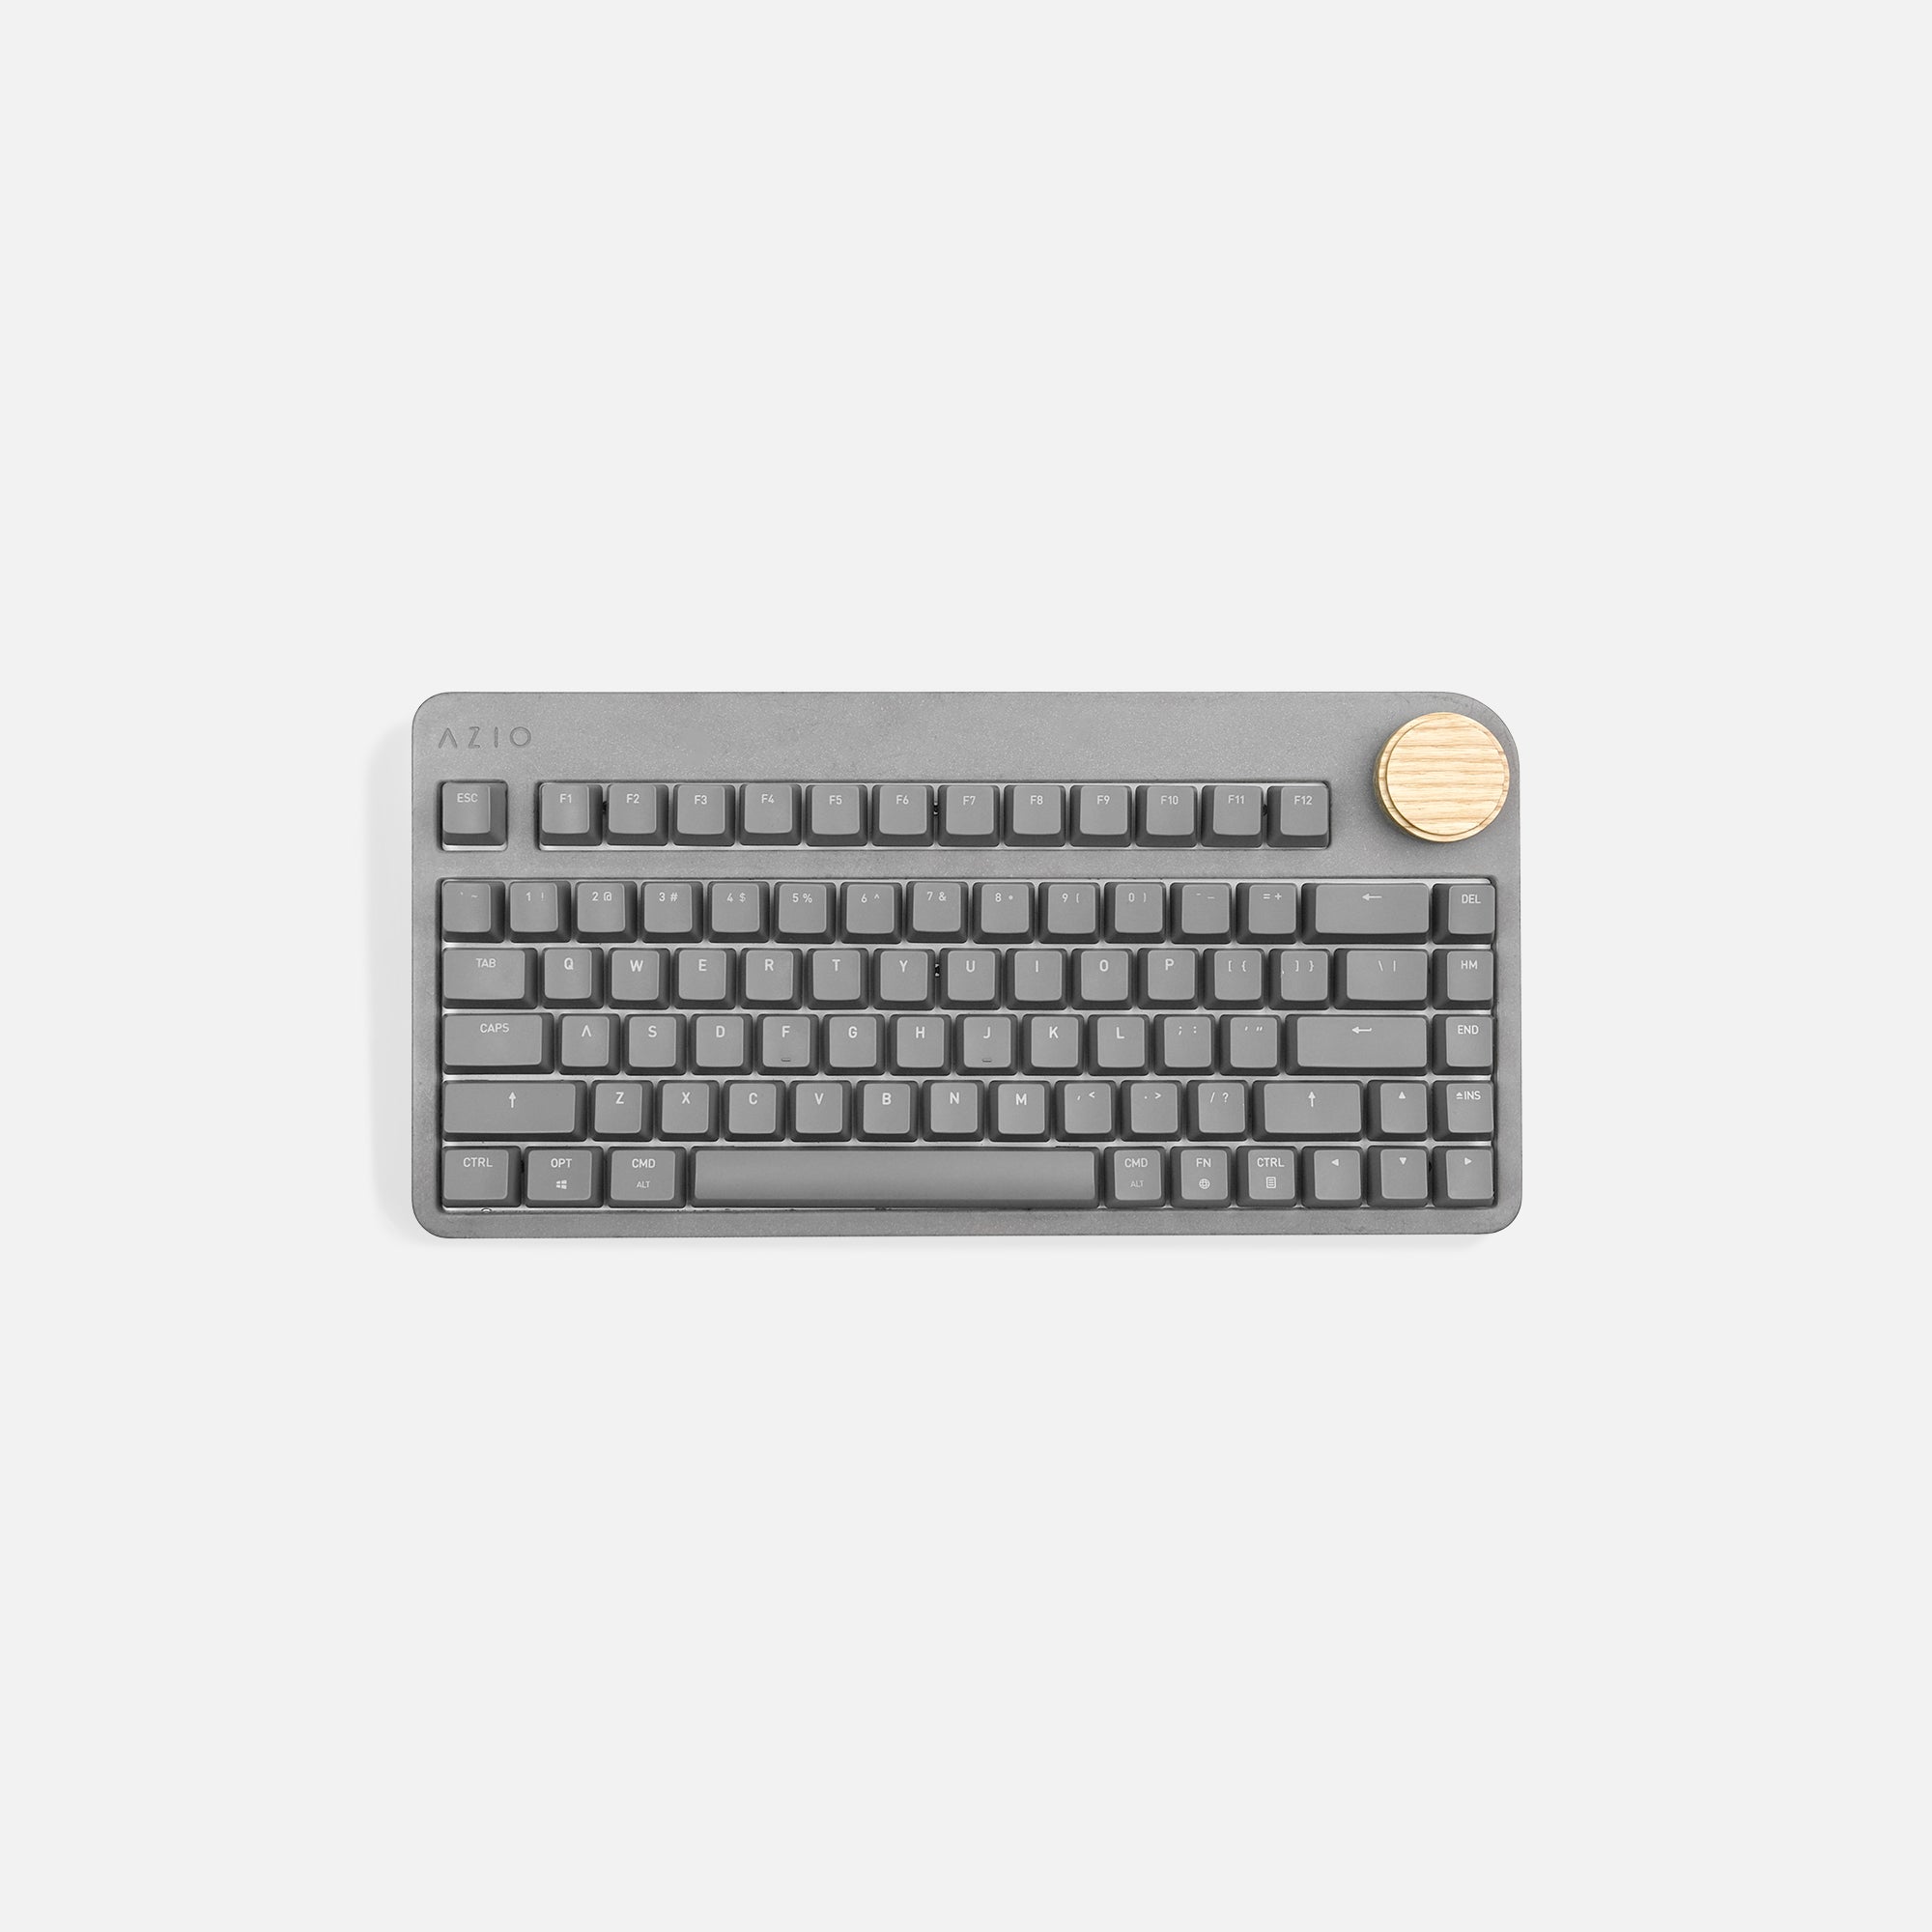 Drahtlose Tera75-Tastatur